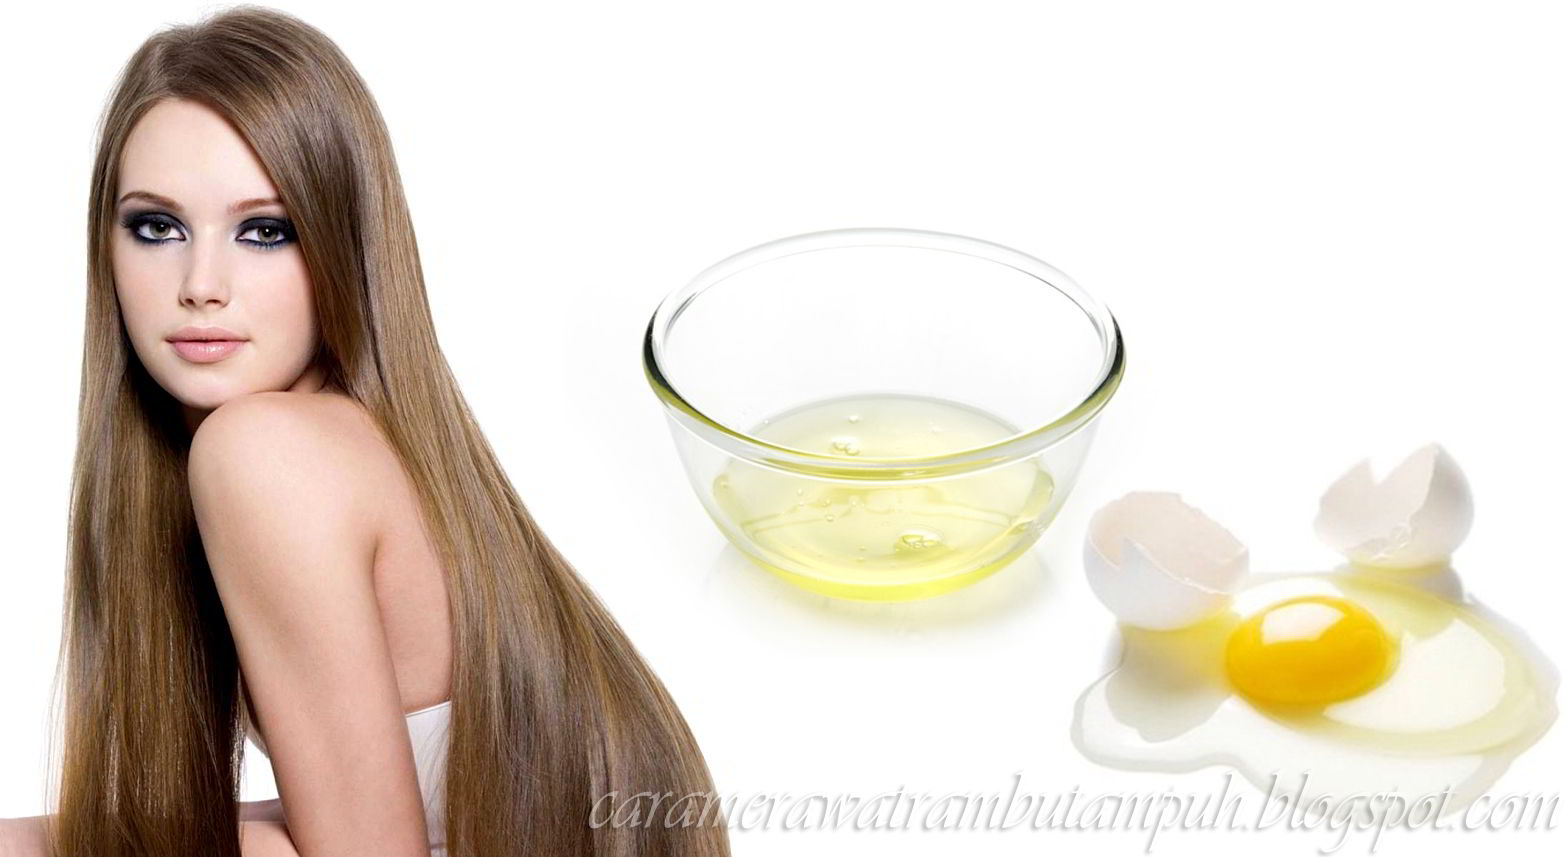 Manfaat Putih Telur Untuk Meluruskan Rambut Dan Cara Menggunakannya